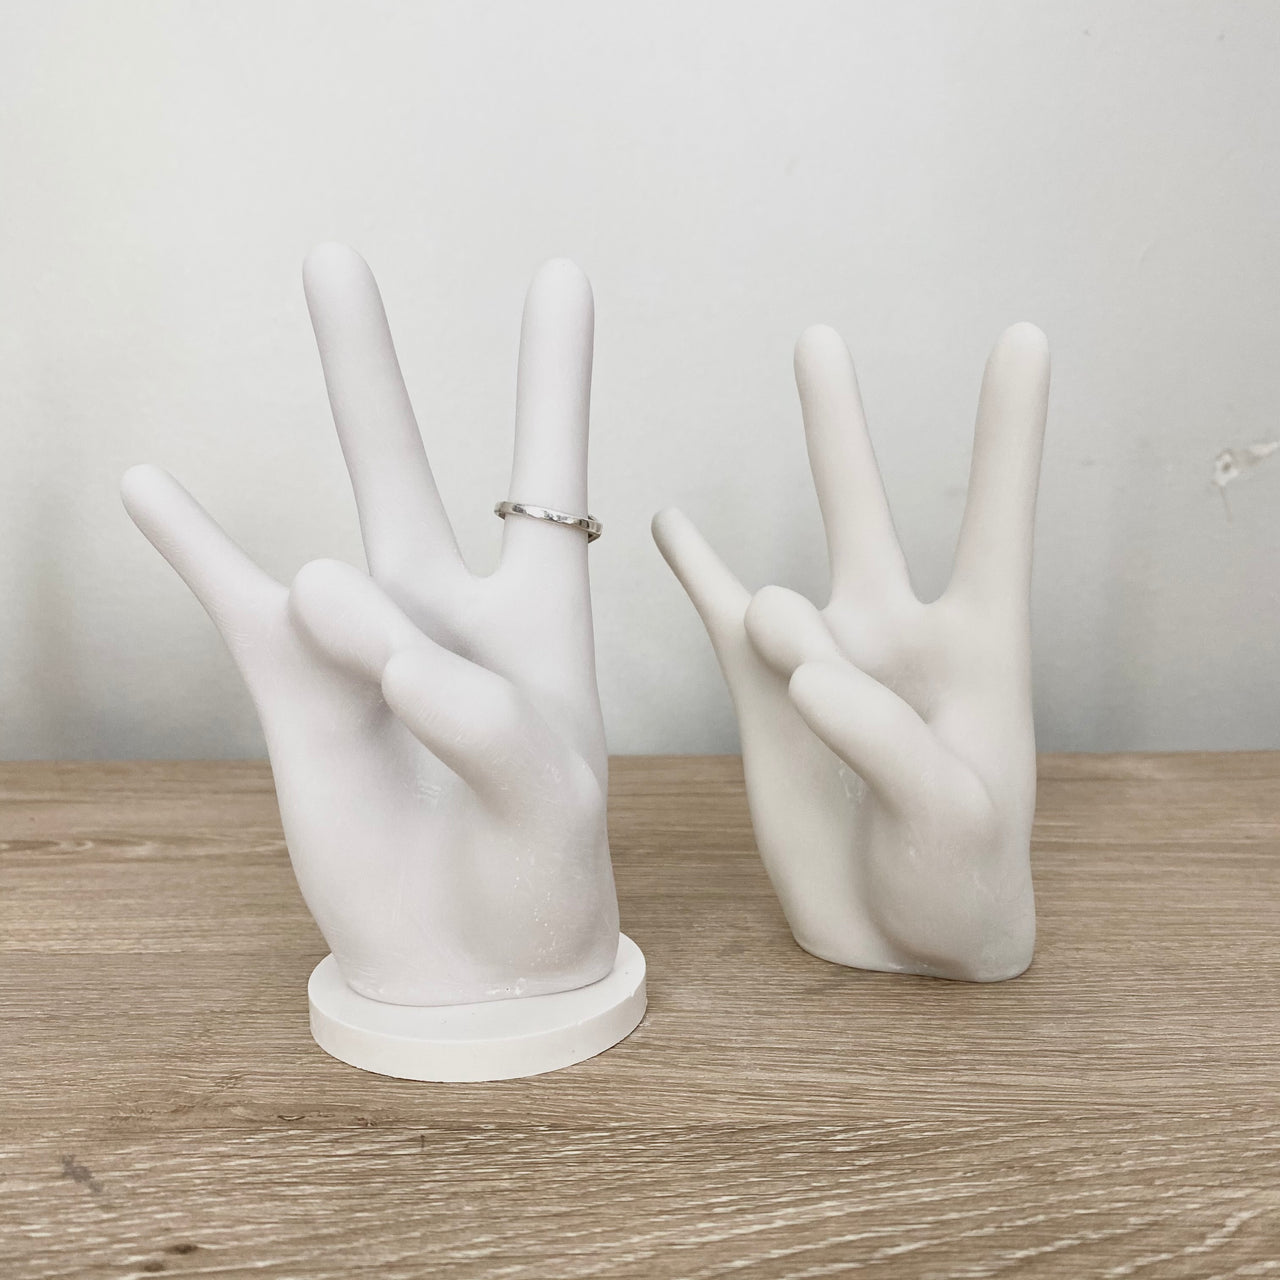 white bonded marble ring holder in shape of cougar hand signal on desk